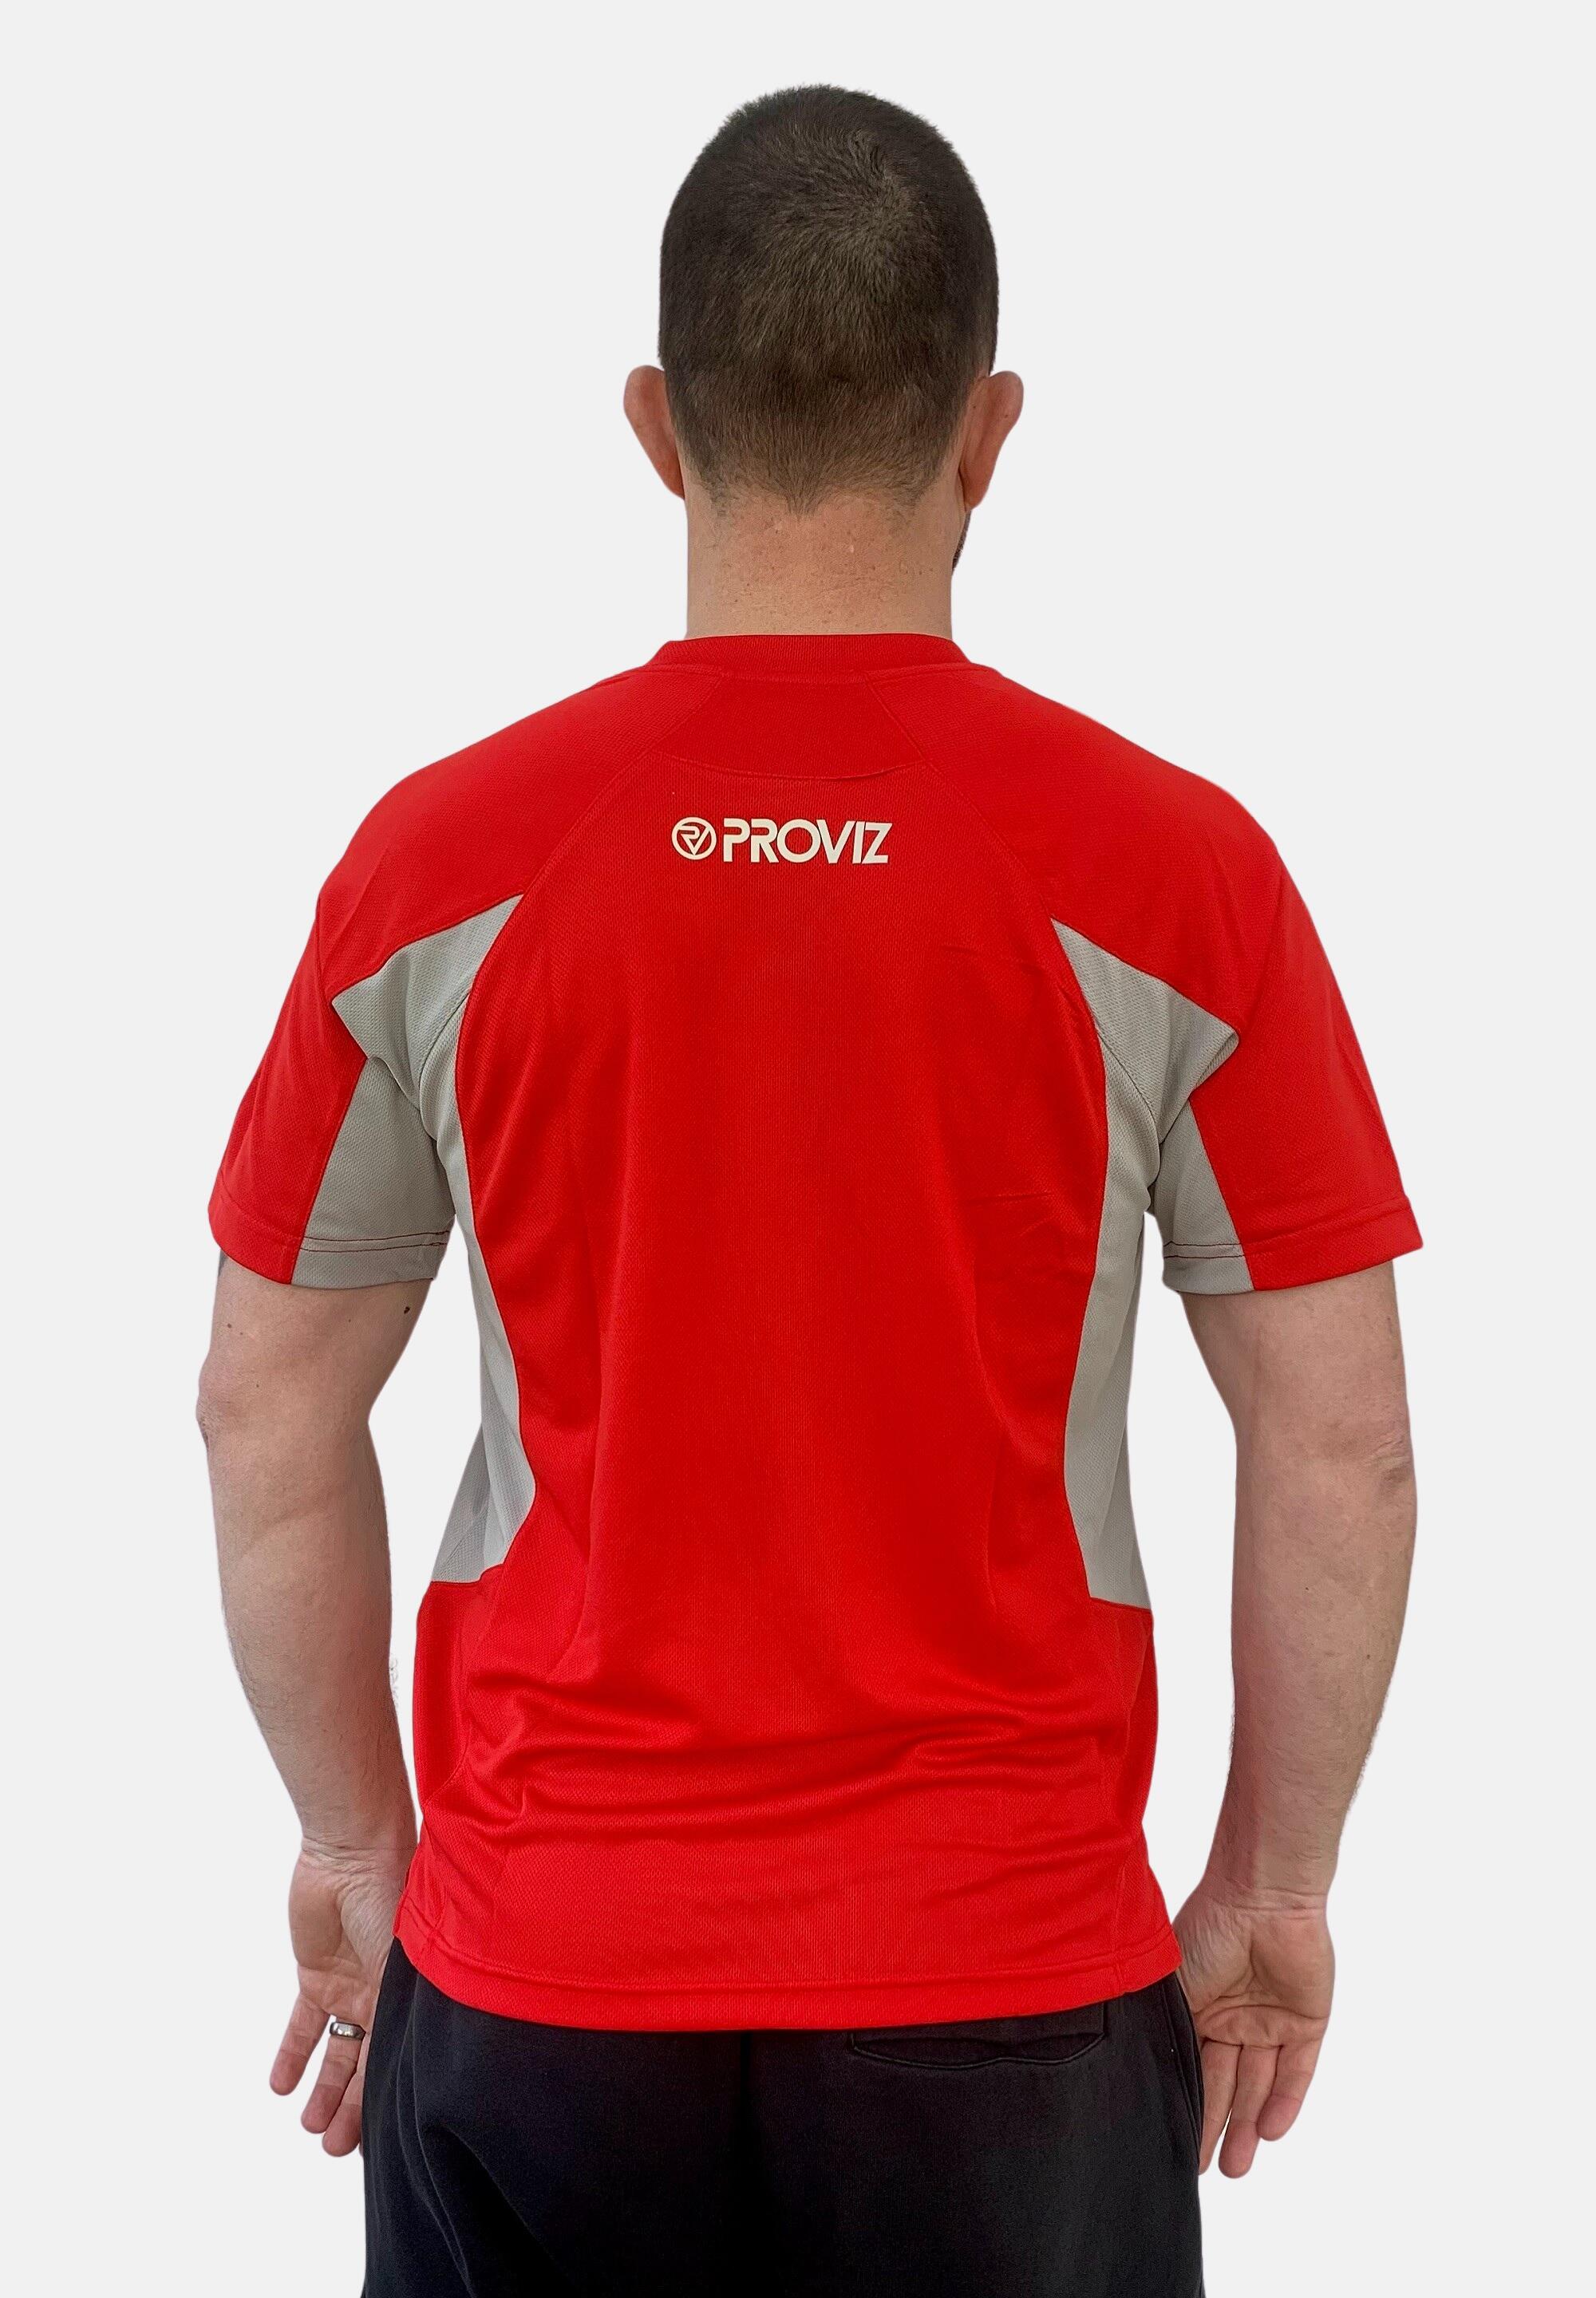 Proviz Classic Mens Sports T-Shirt Short Sleeve Reflective Activewear Top 4/7